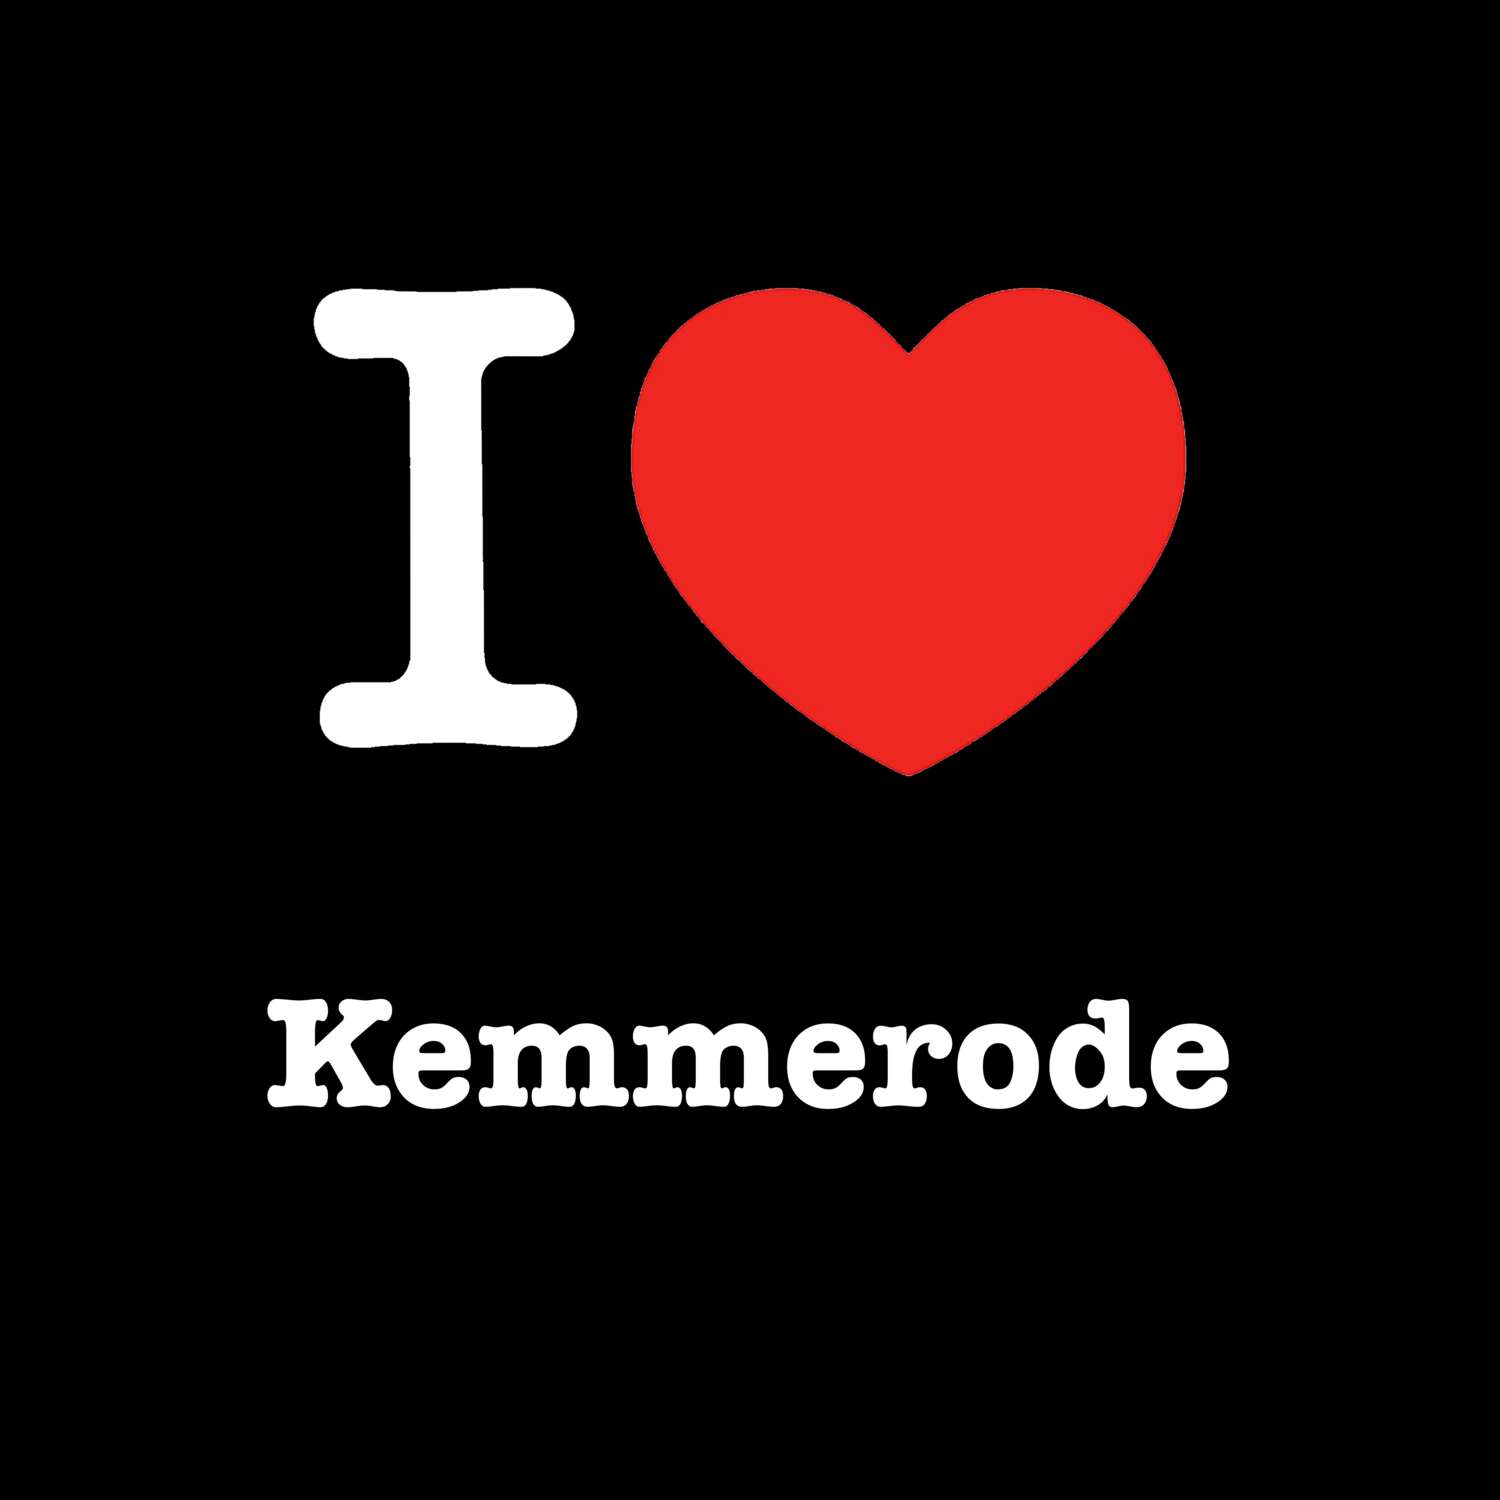 Kemmerode T-Shirt »I love«